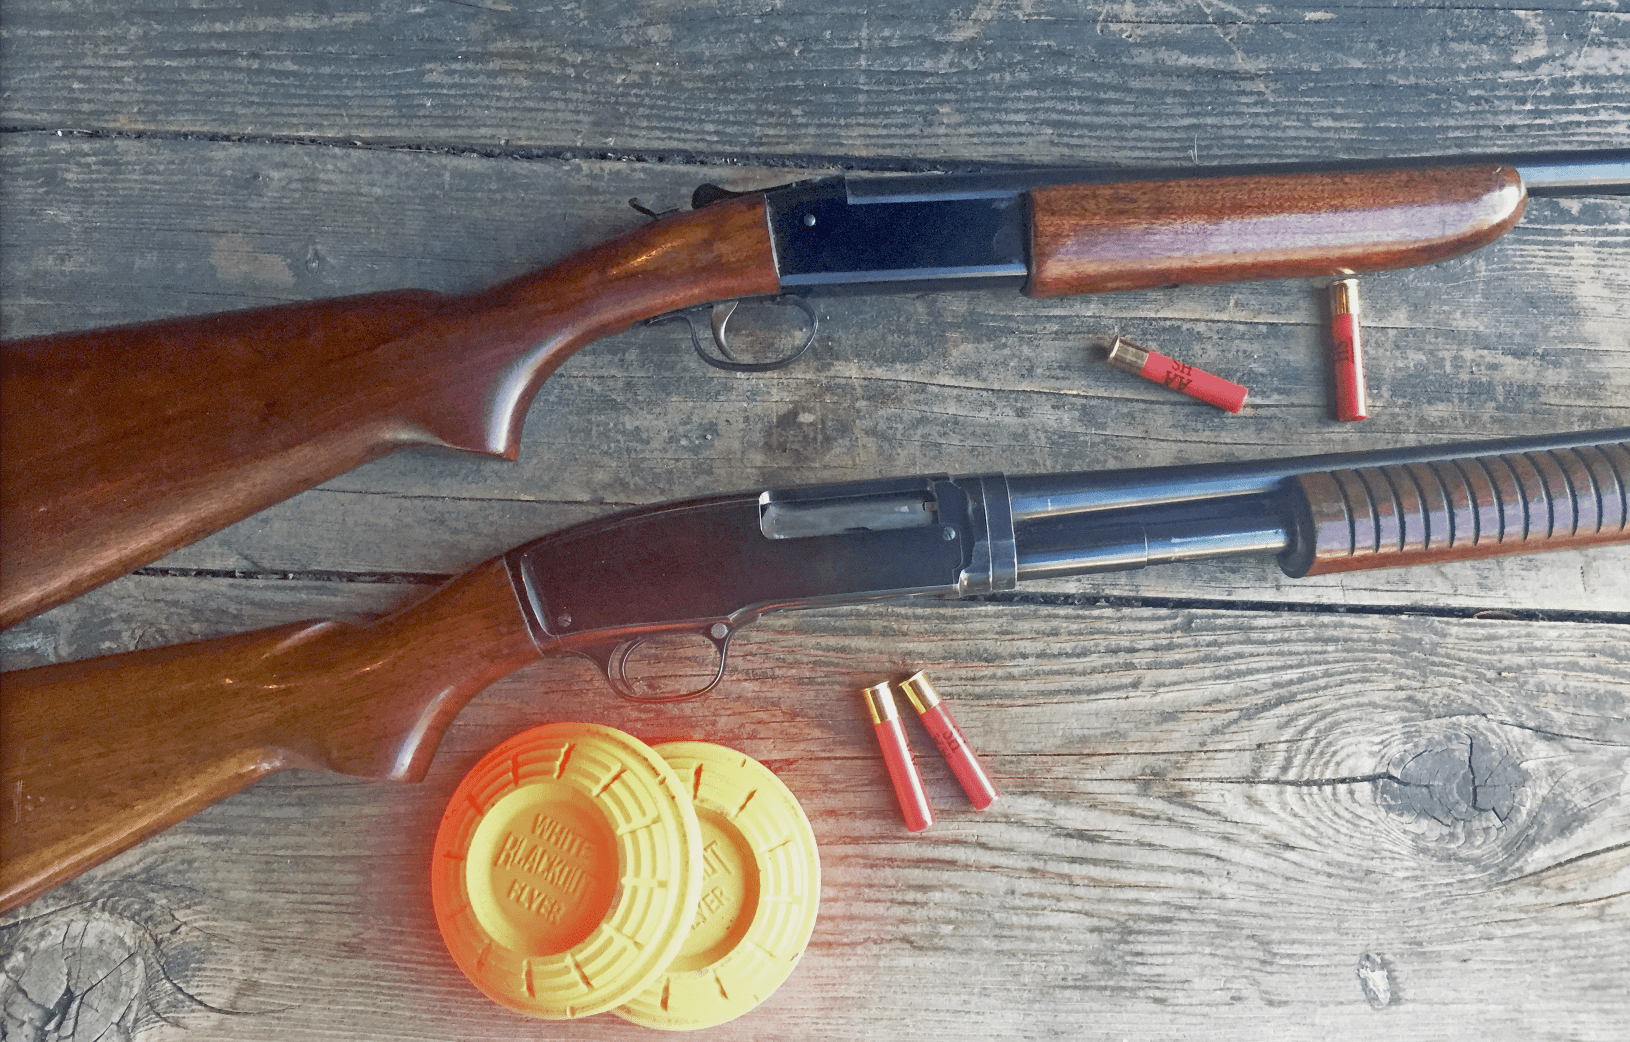 M12和M37是温彻斯特最好的两种小型霰弹枪。